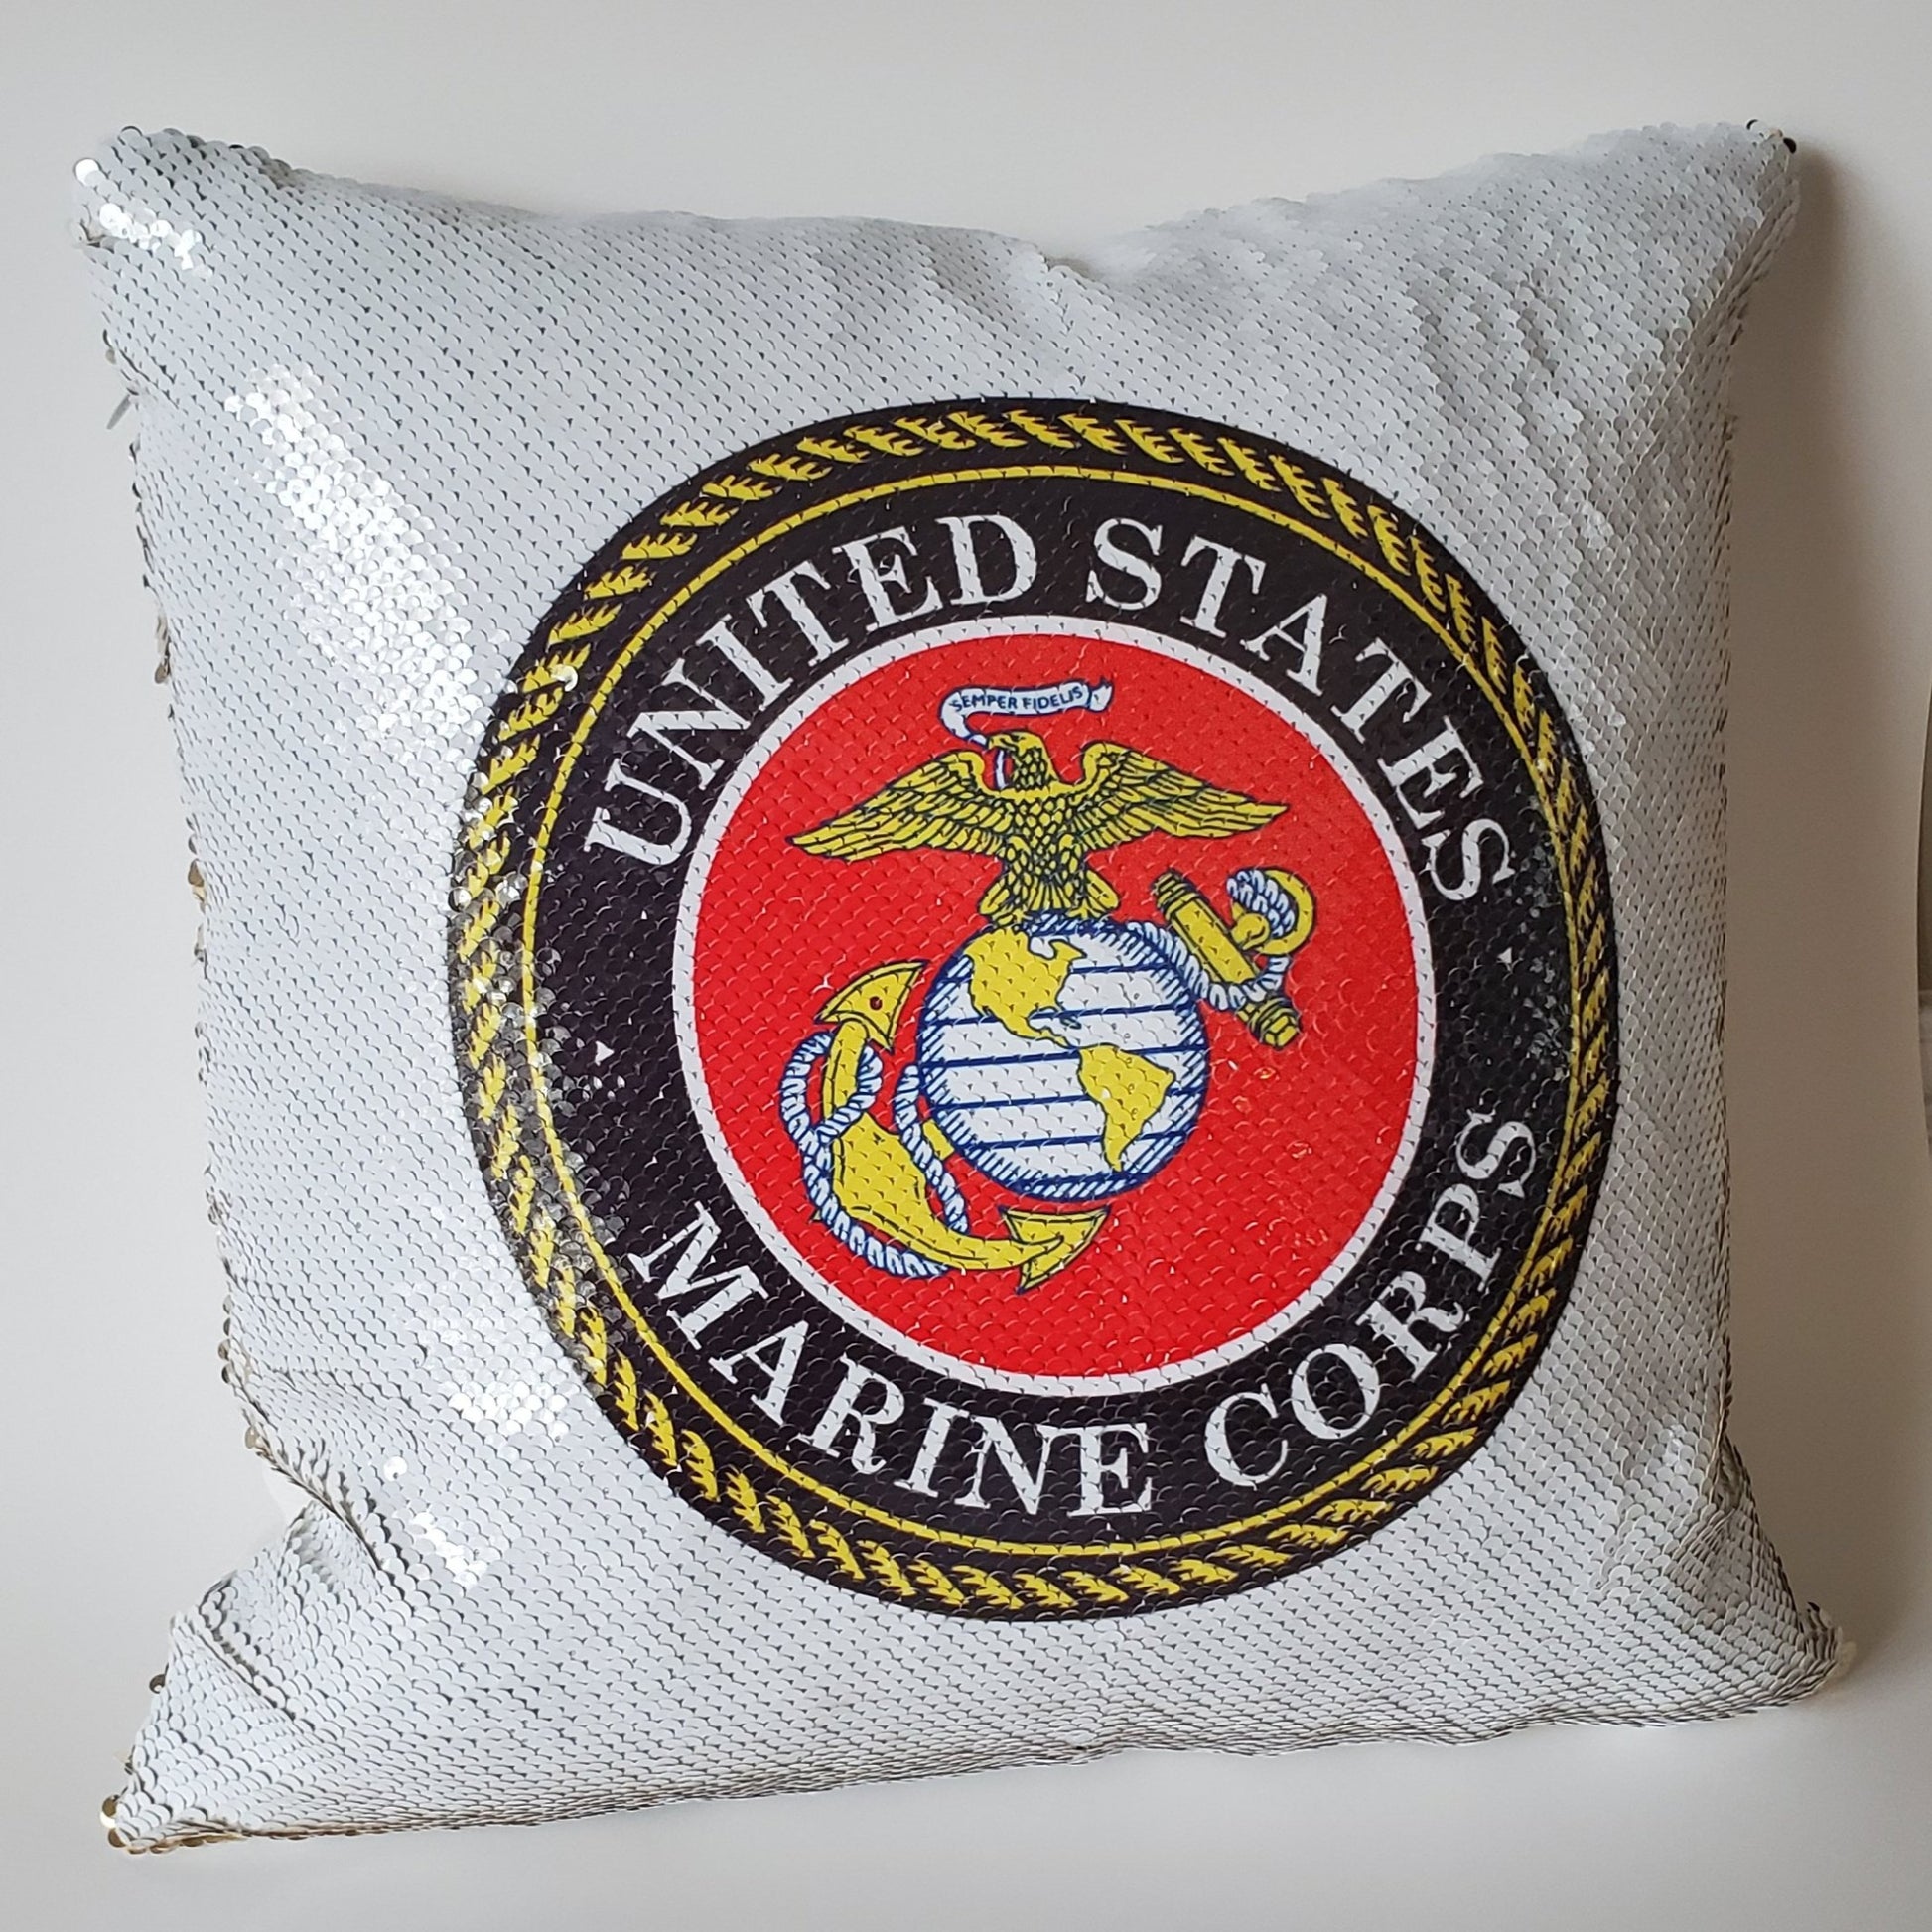 Marine corps pillow